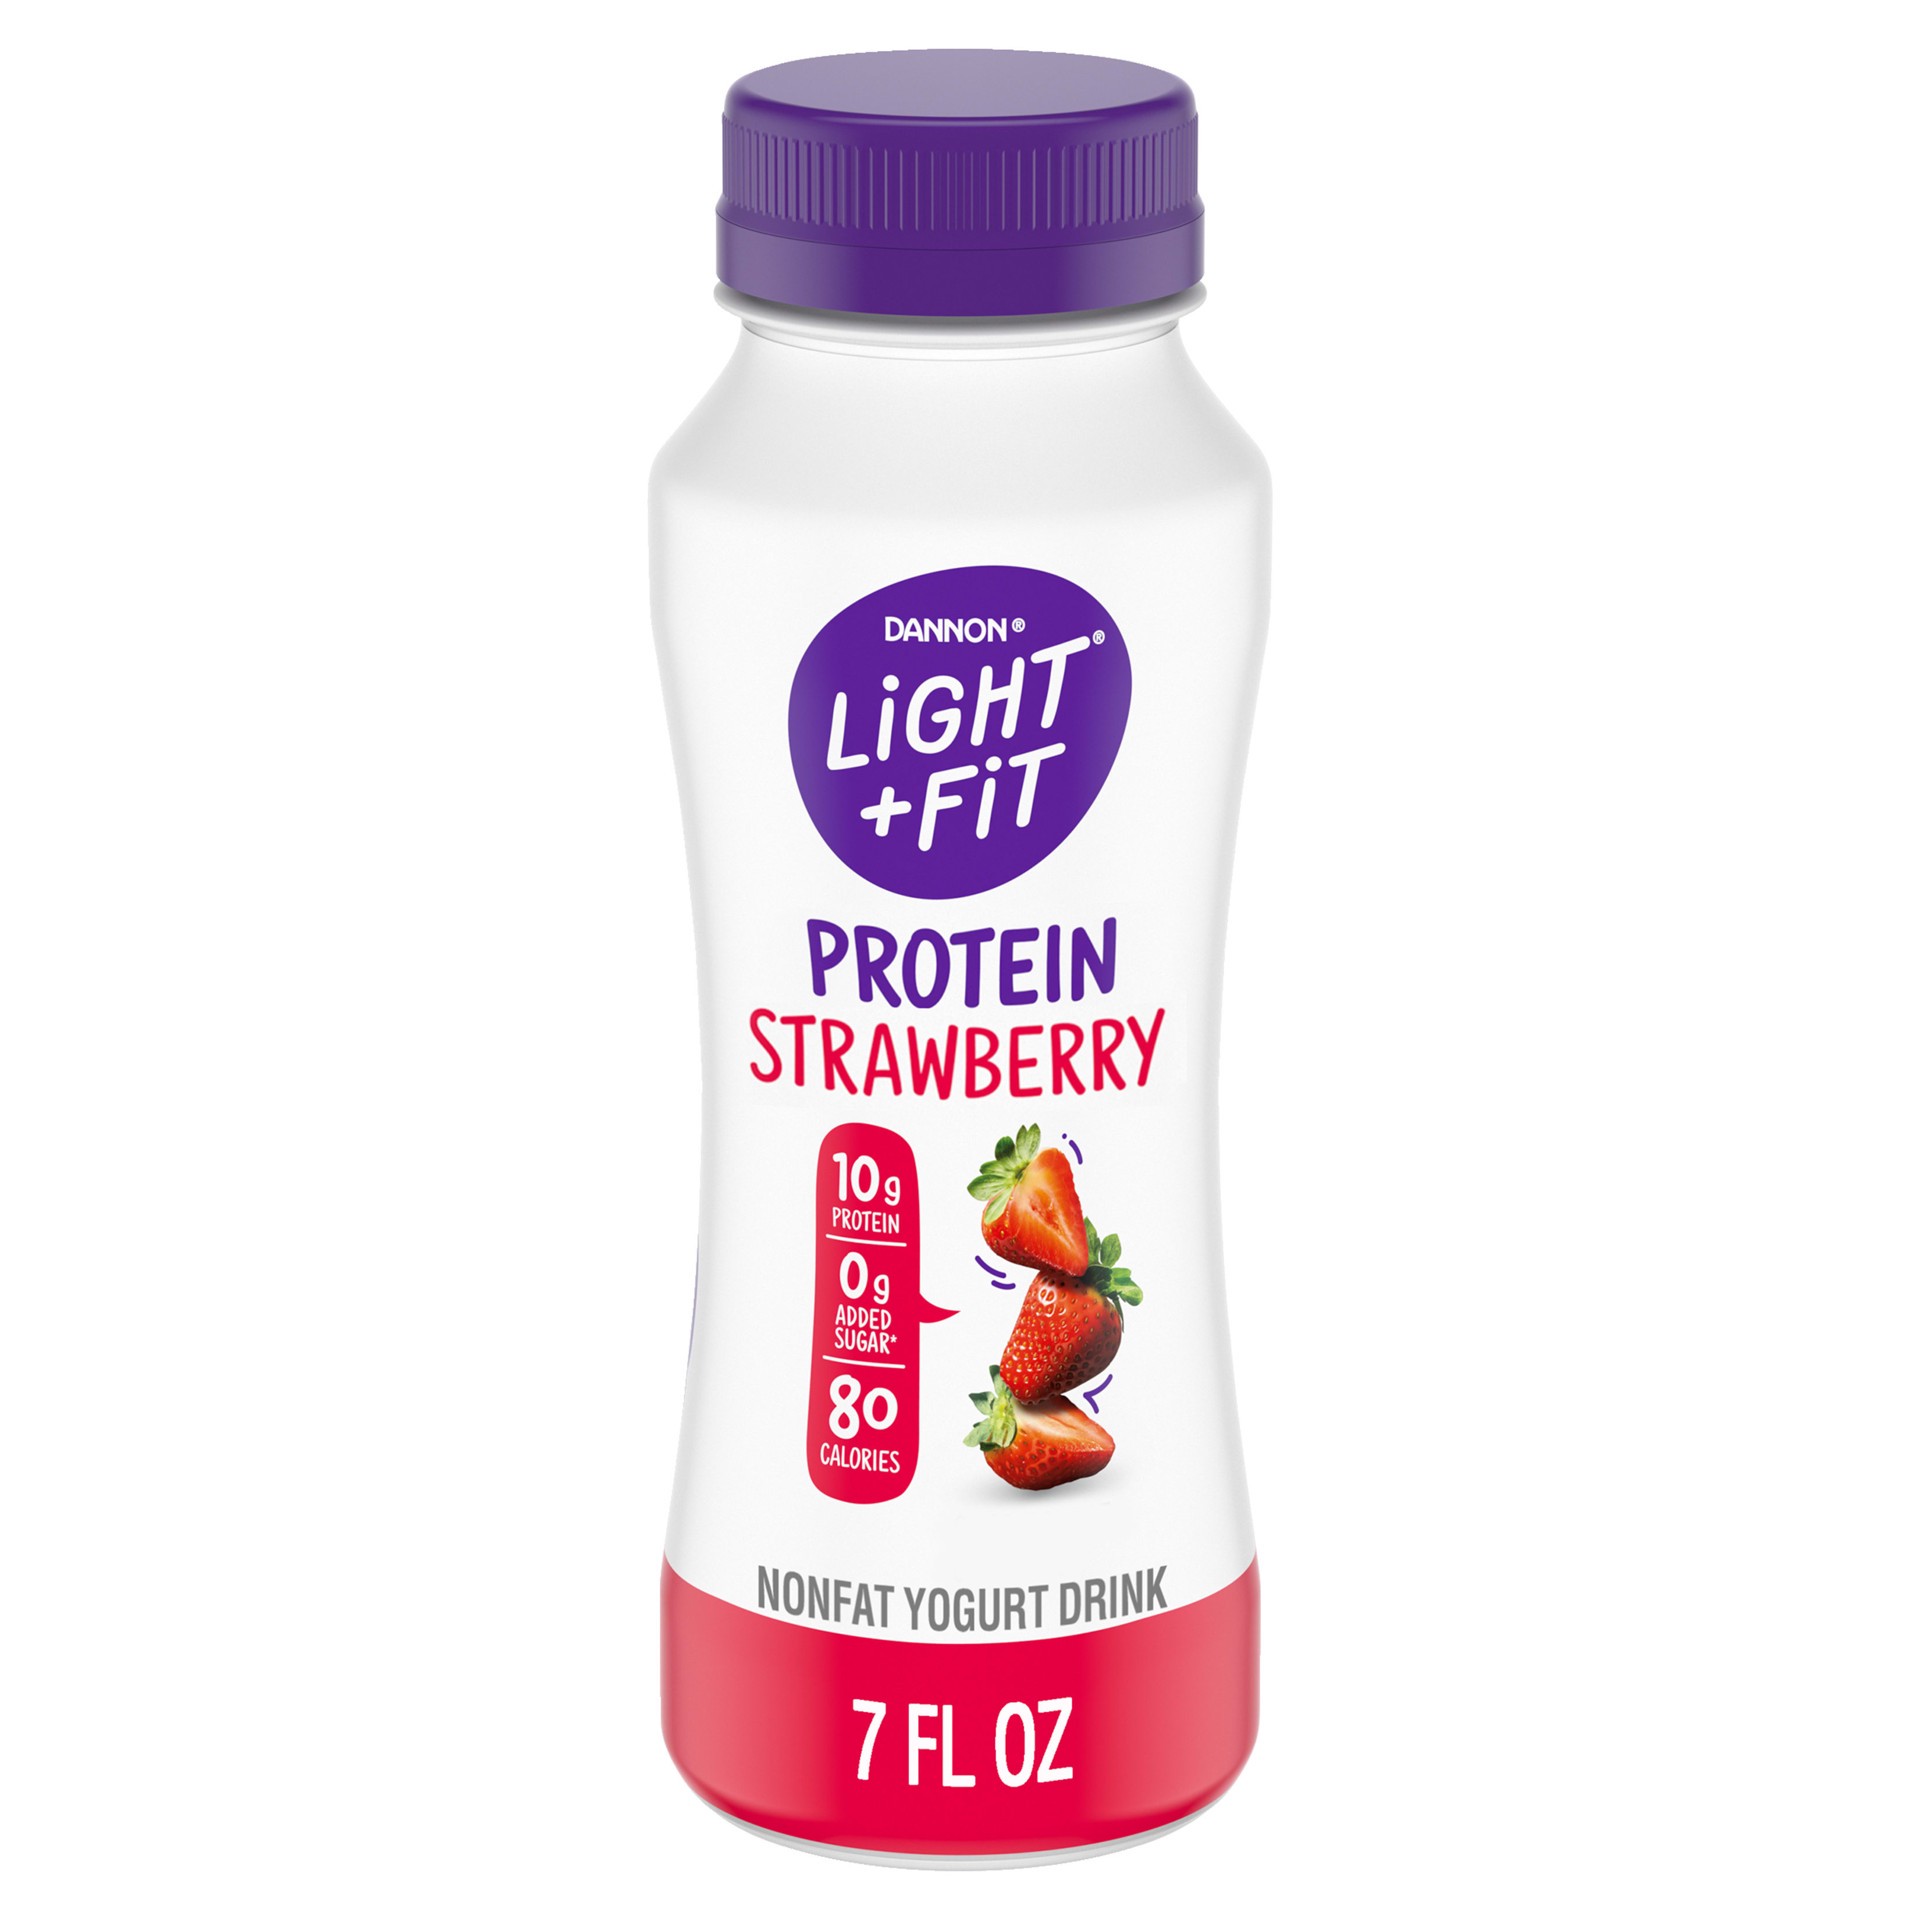 slide 1 of 14, Light + Fit Dannon Light + Fit Nonfat Yogurt Drink Protein Smoothie, Strawberry, 0g Added Sugar*, 7 oz., 7 fl oz